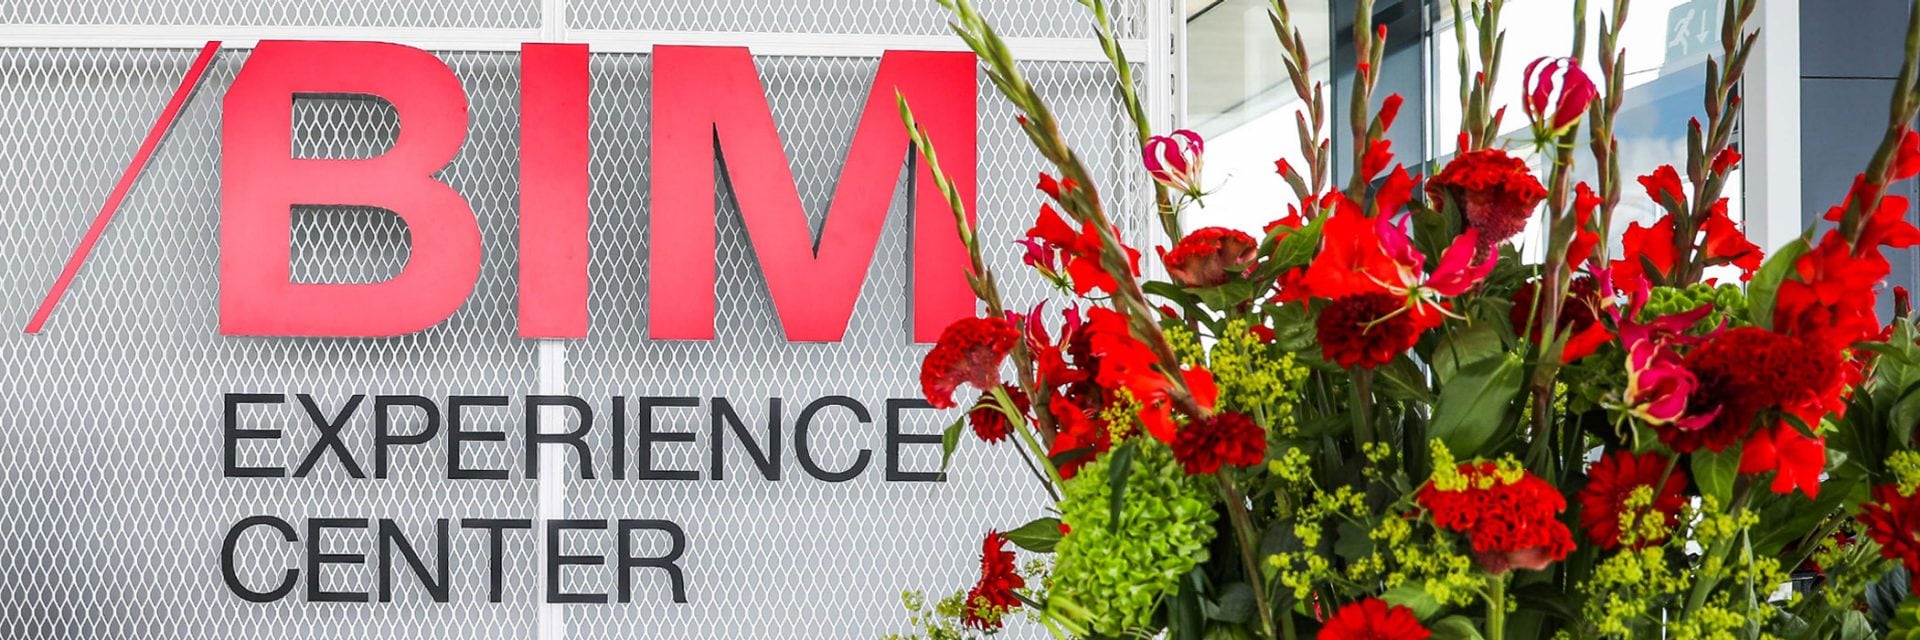 BIM Experience Center